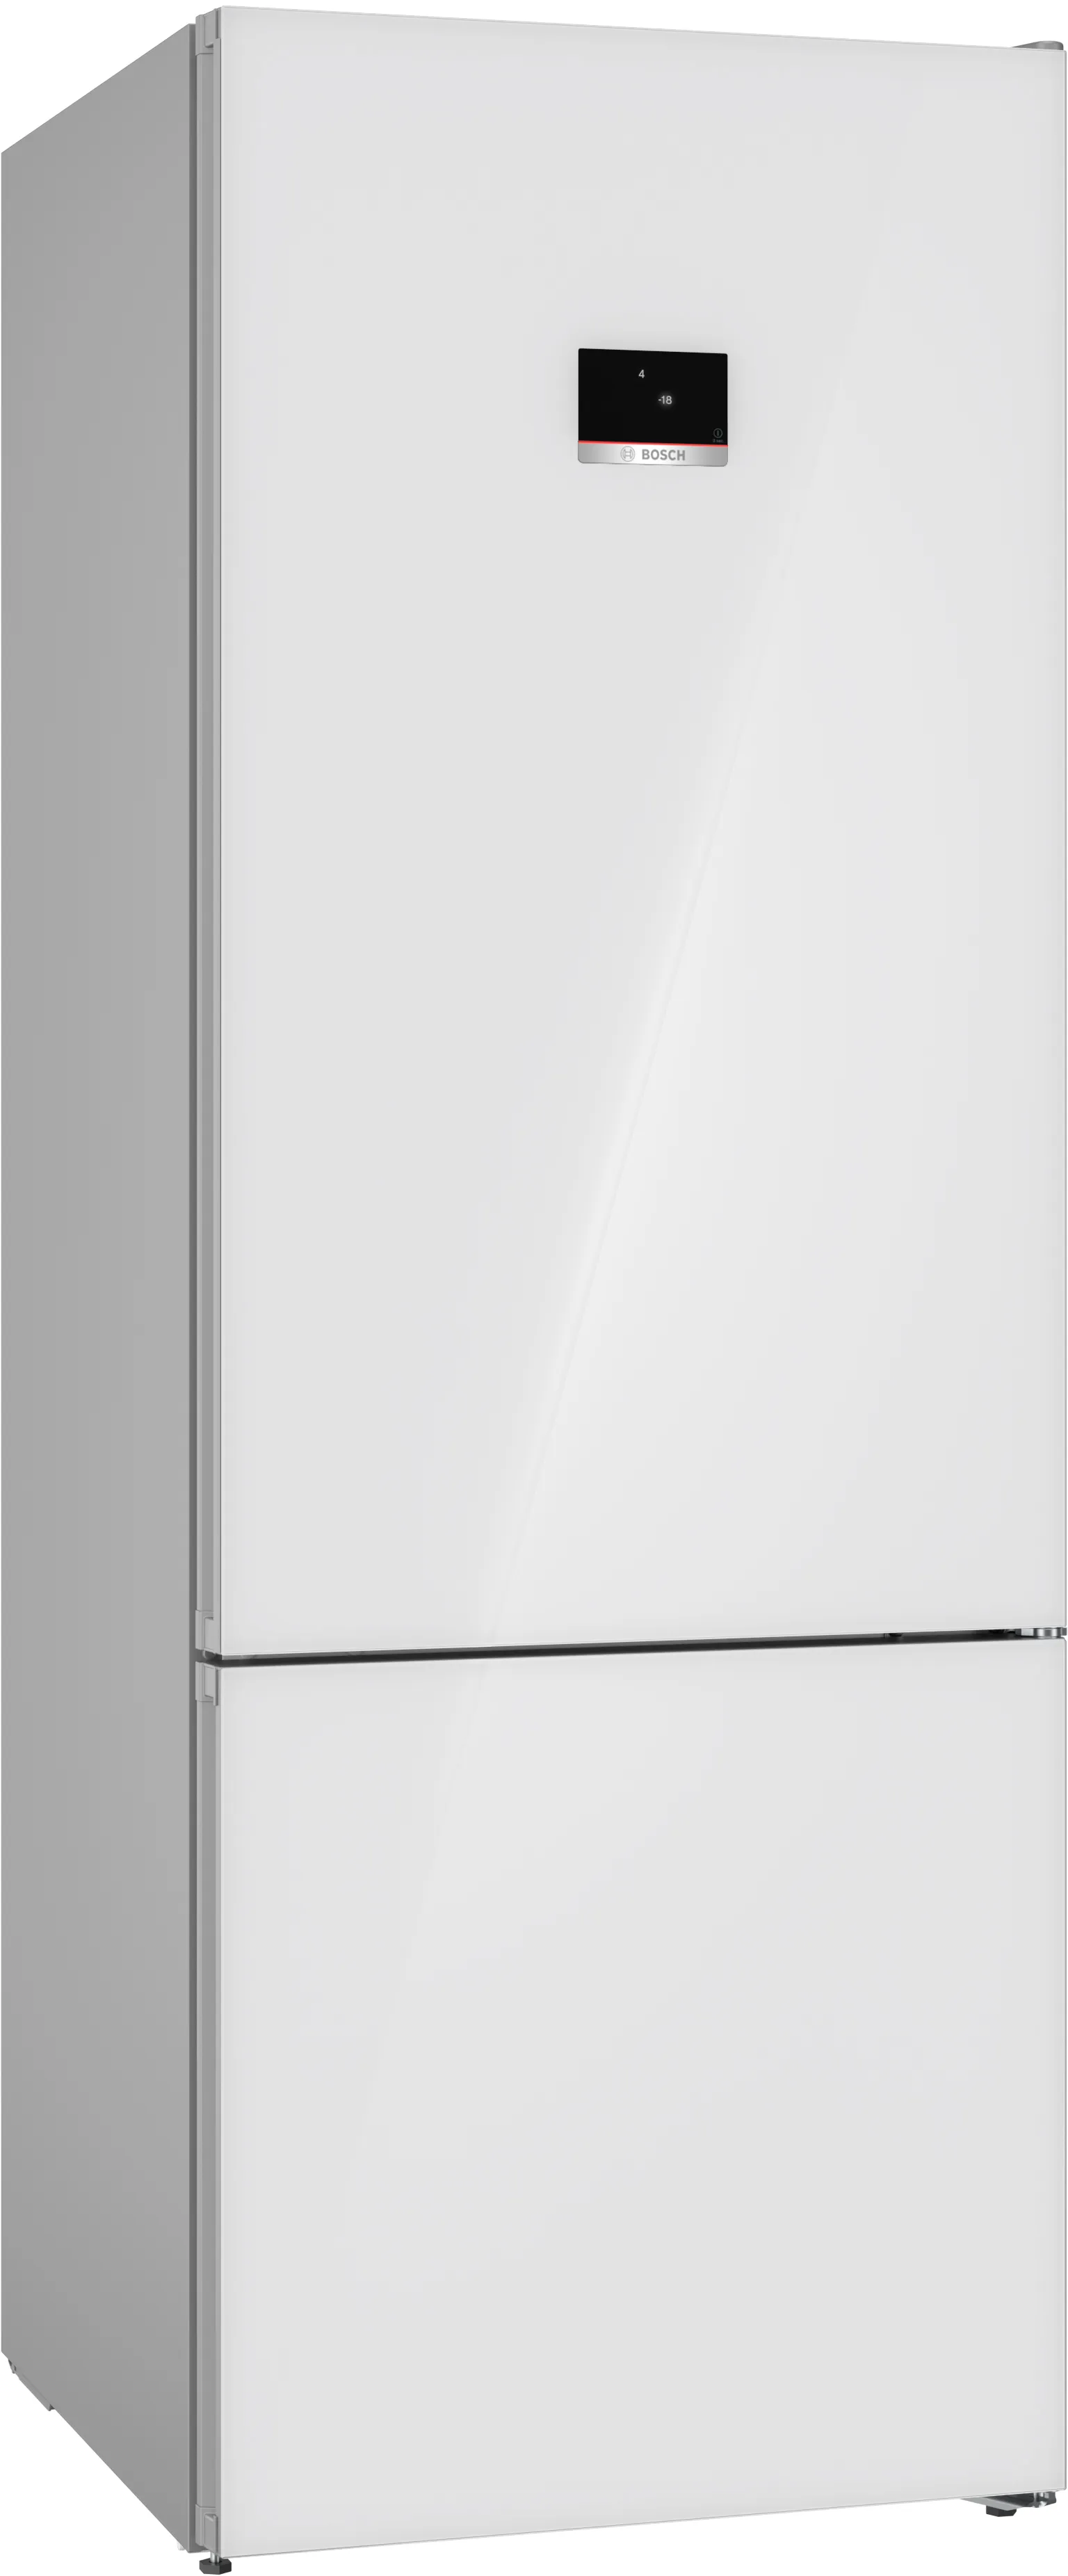 Series 6 free-standing fridge-freezer with freezer at bottom, glass door 193 x 70 cm White 